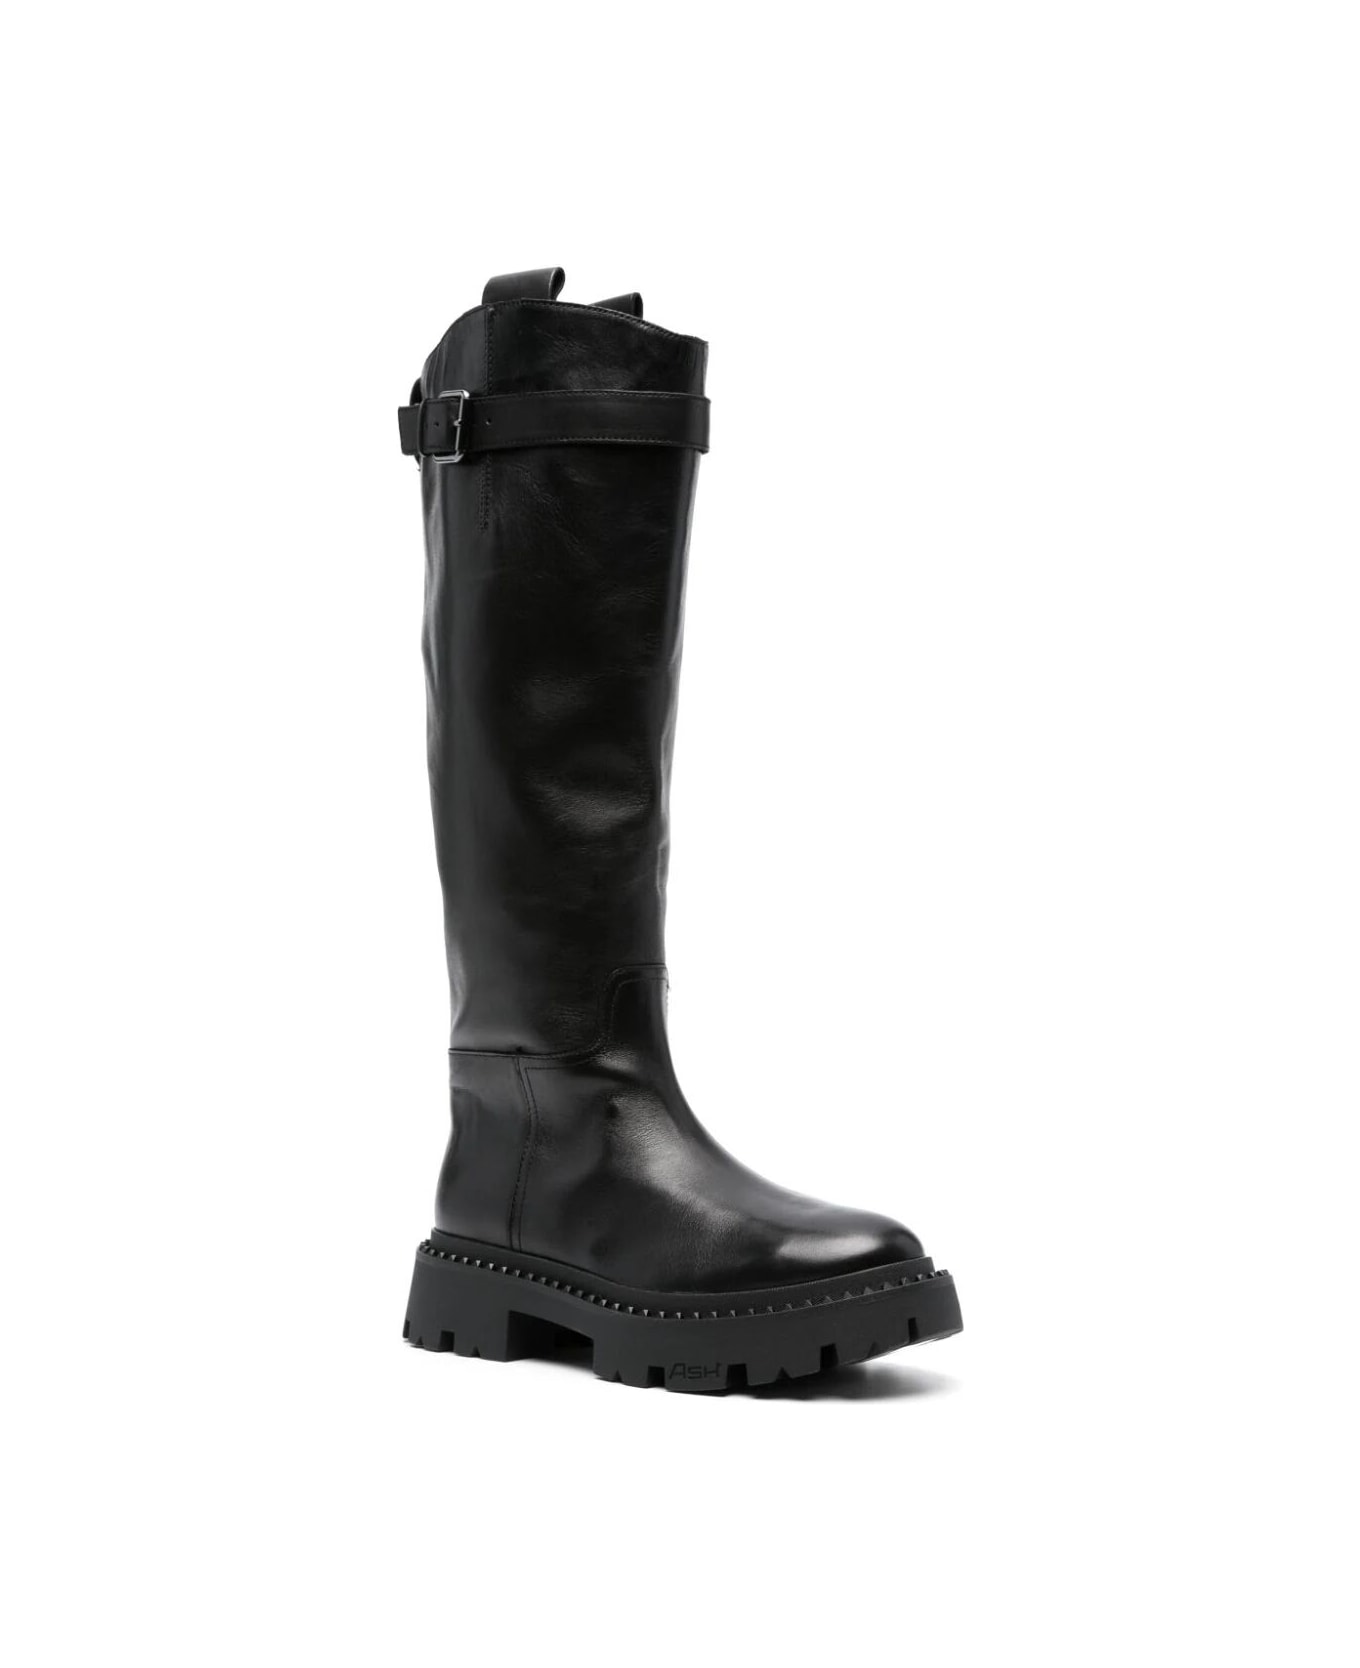 Ash Galaxy01 High Boots - Black